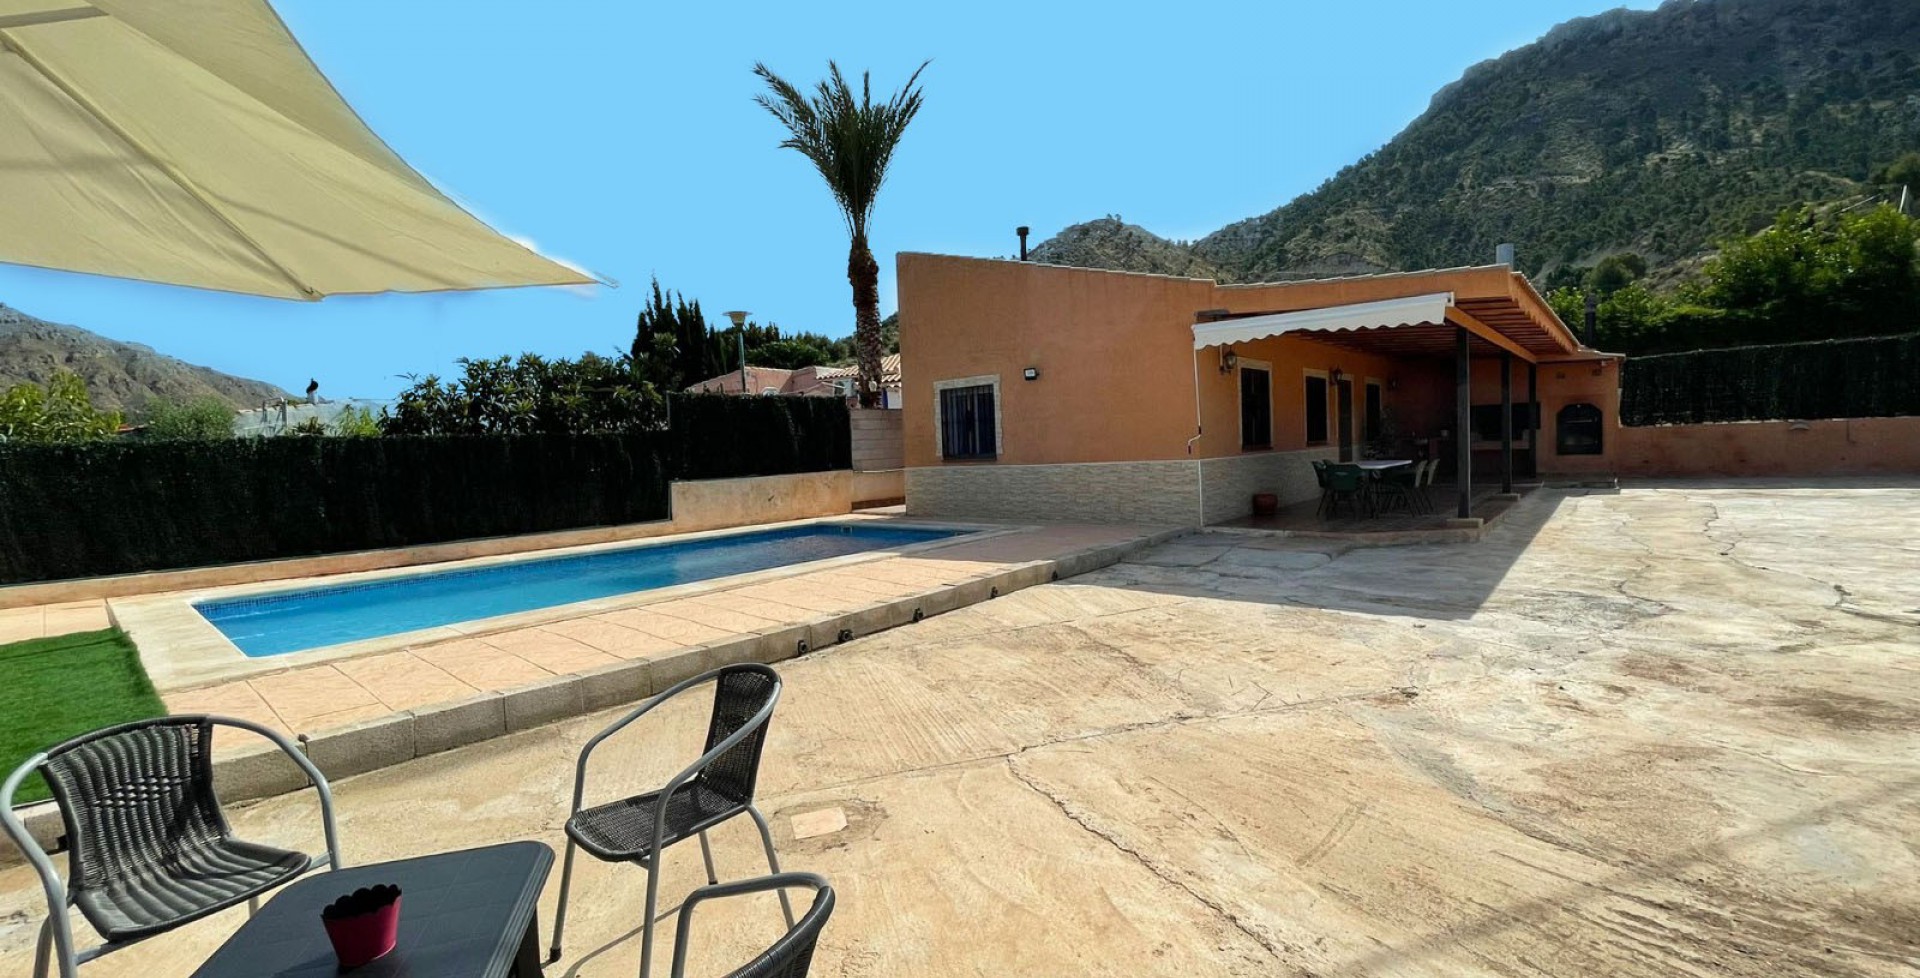 immaculate villa with beautiful swimming pool, Blanca, Murcia, Spain